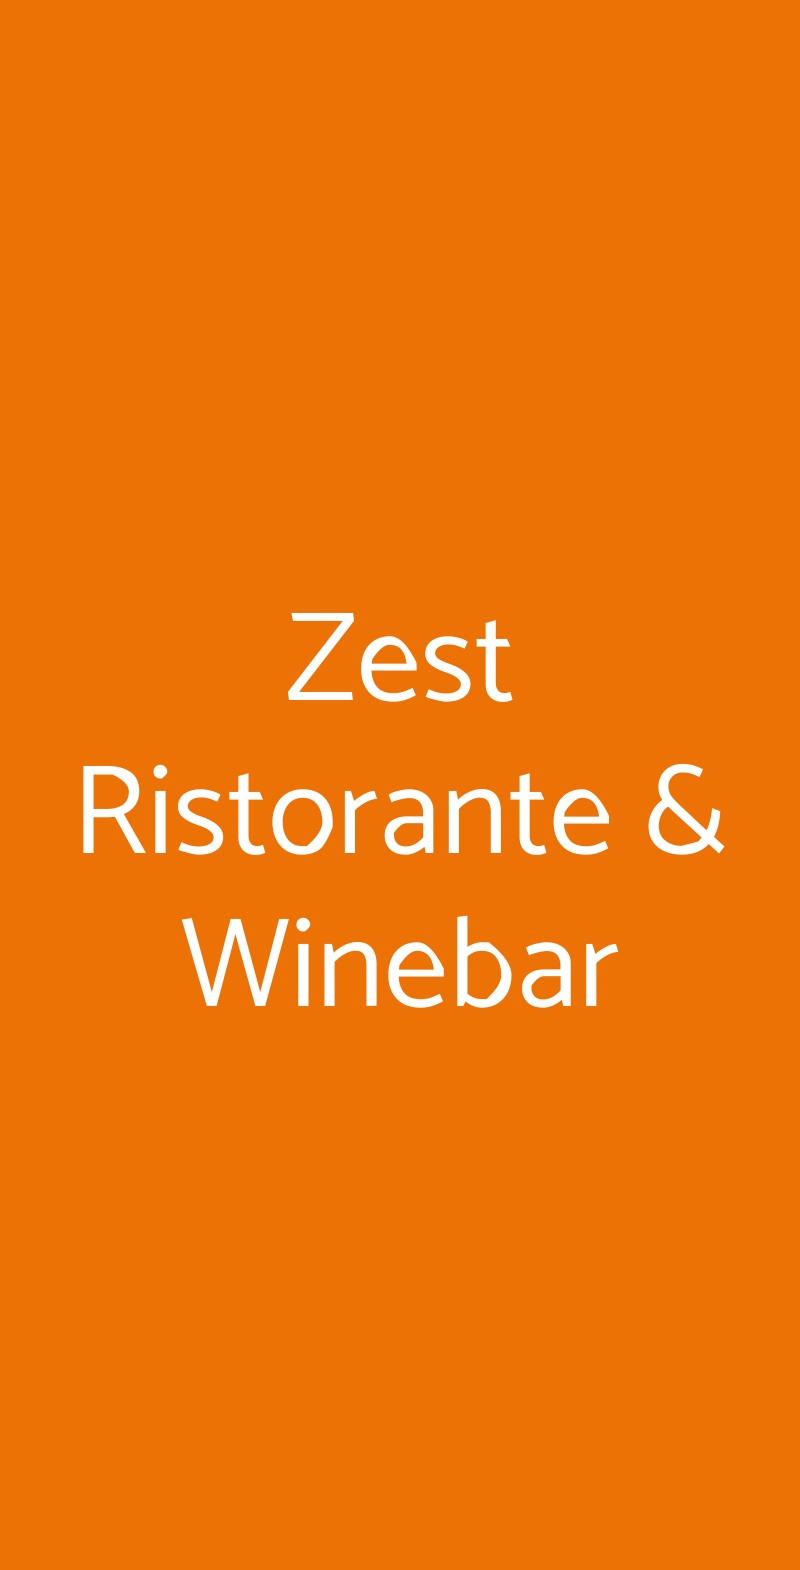 Zest Ristorante & Winebar Siena menù 1 pagina